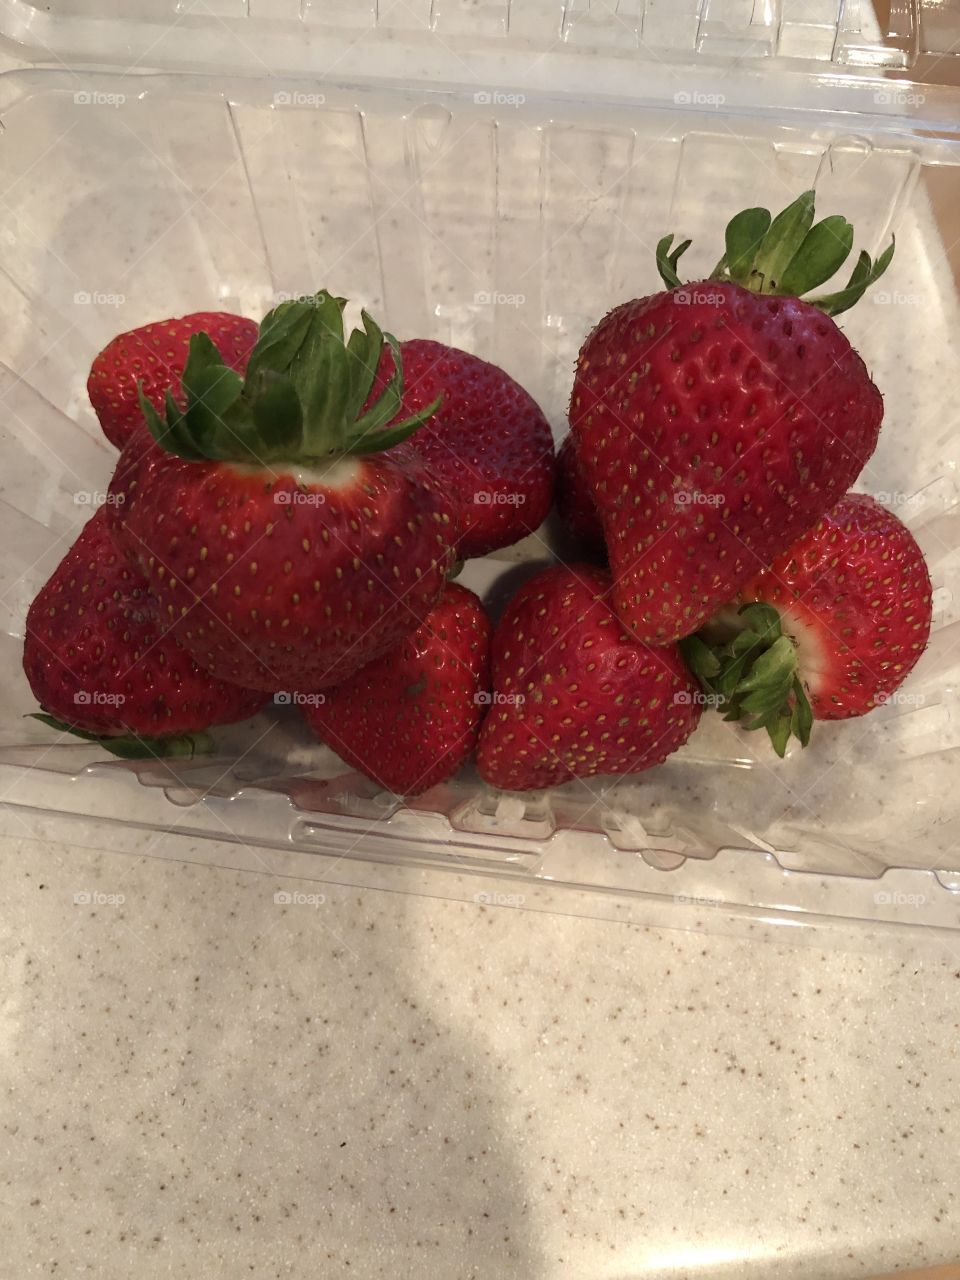 Fresh, delicious Plant City, FL strawberries